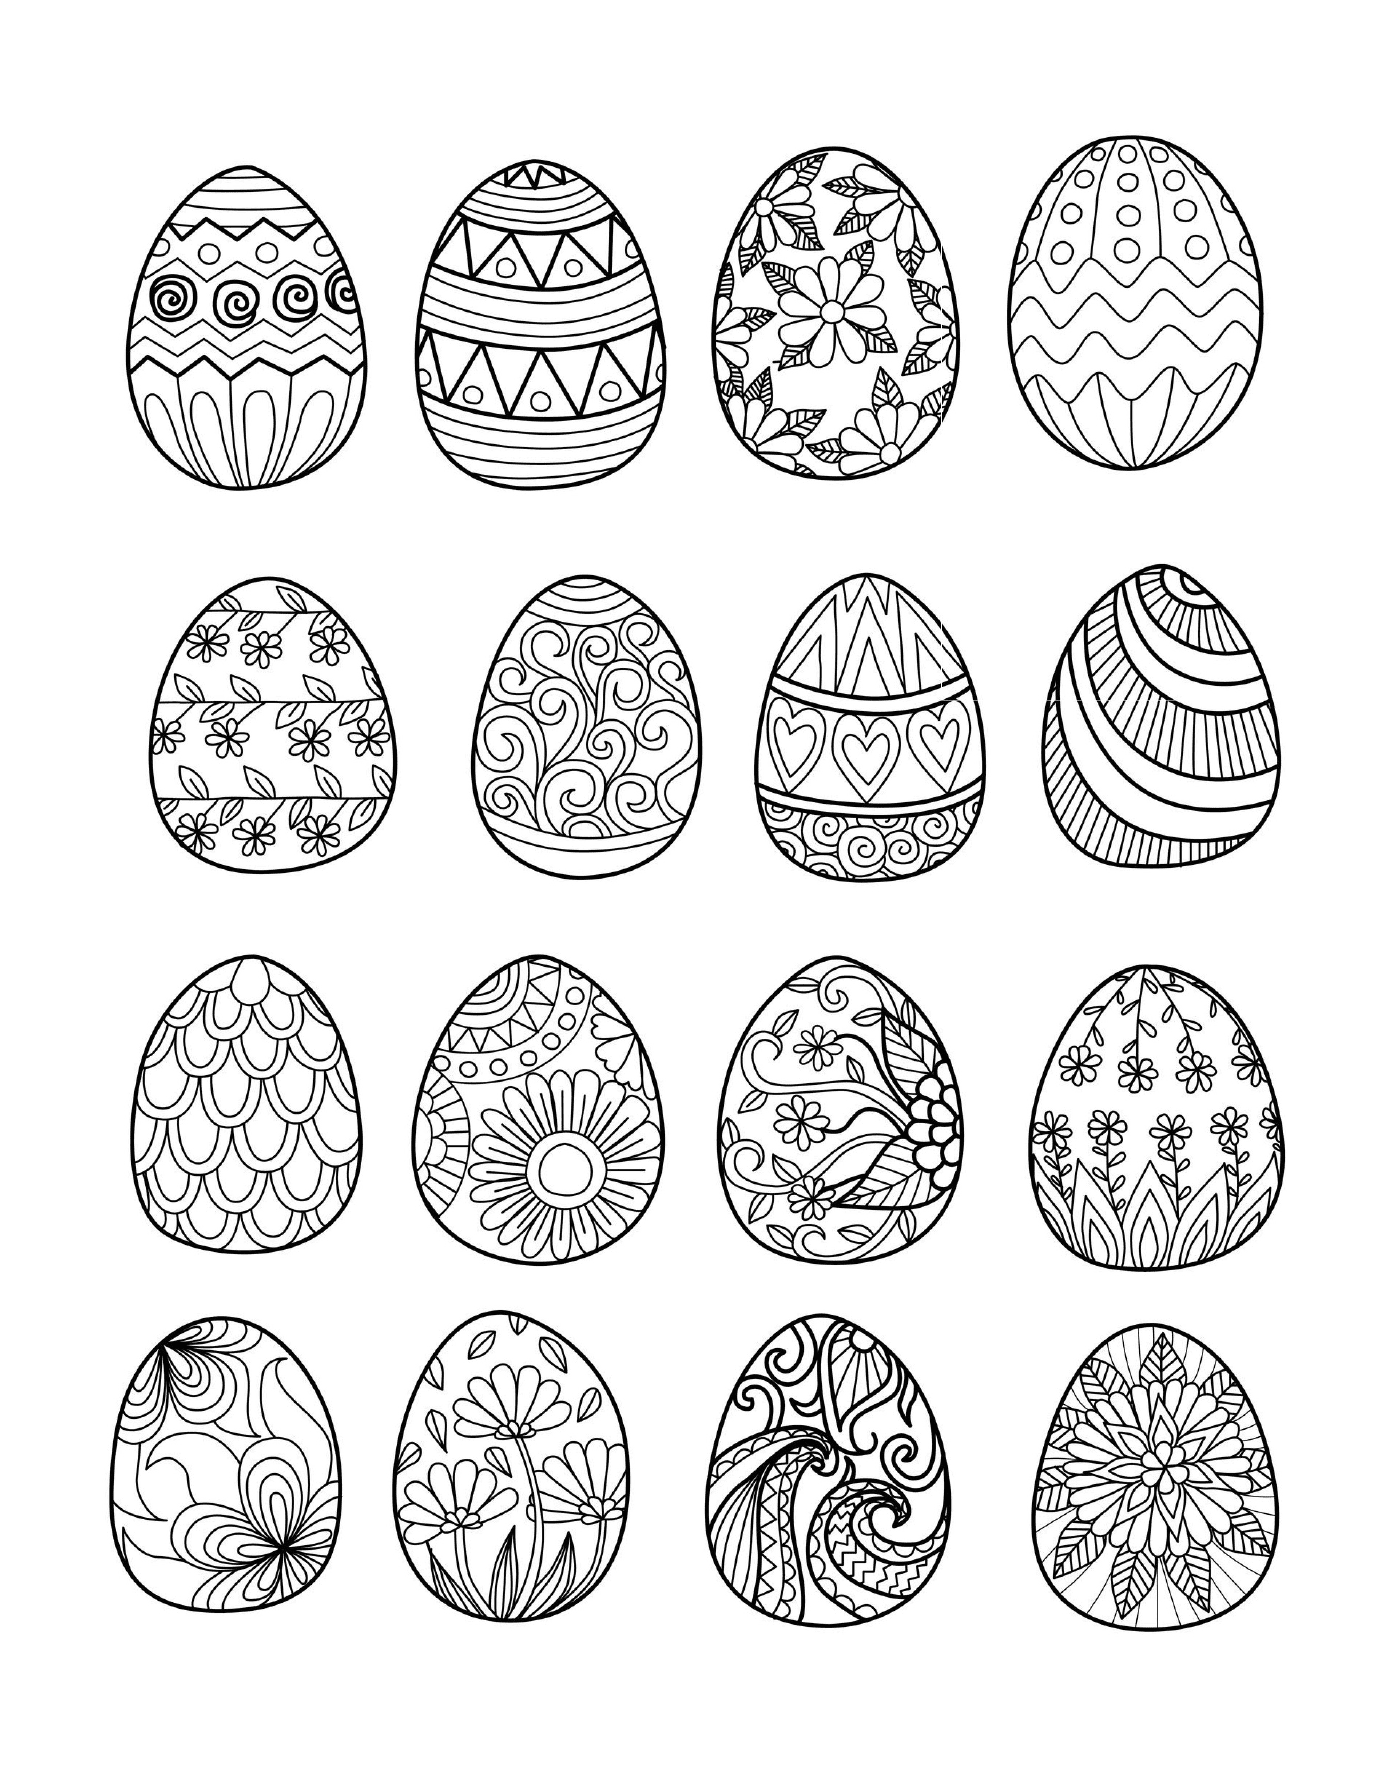  Uova di Pasqua per adulti 2 di Bimdeedee, un set di uova colorate 